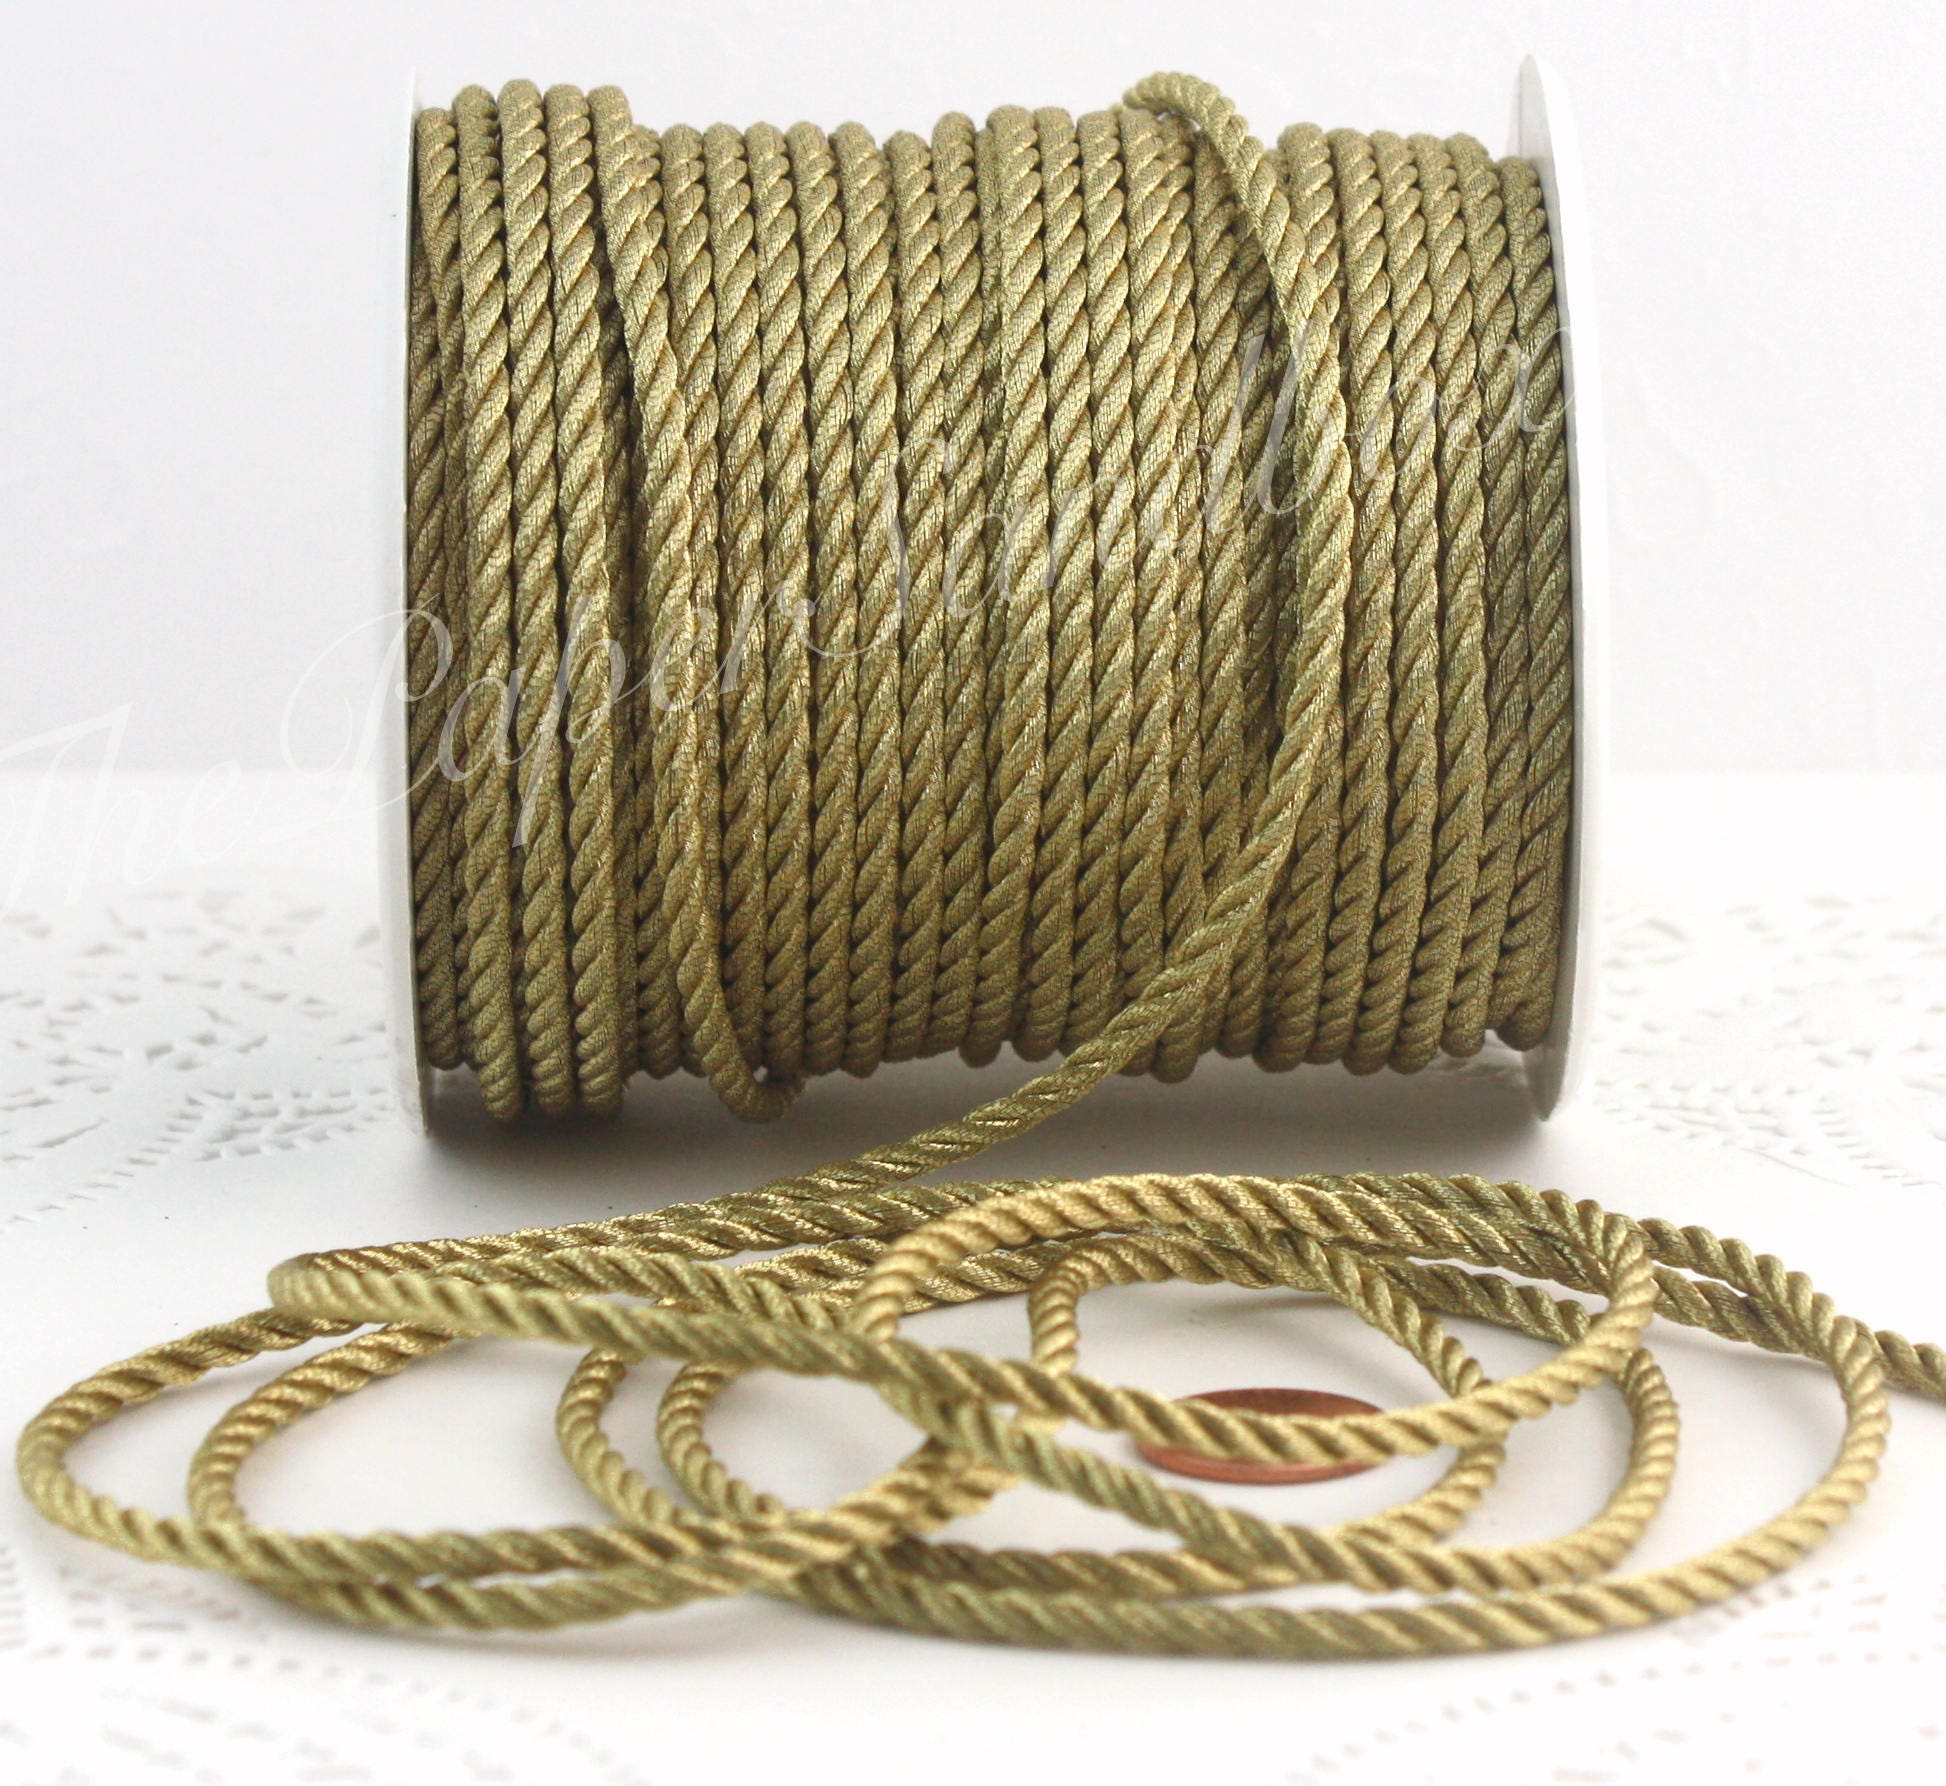 10 yards Gold Metallic Twisted Cord, 1mm Cord